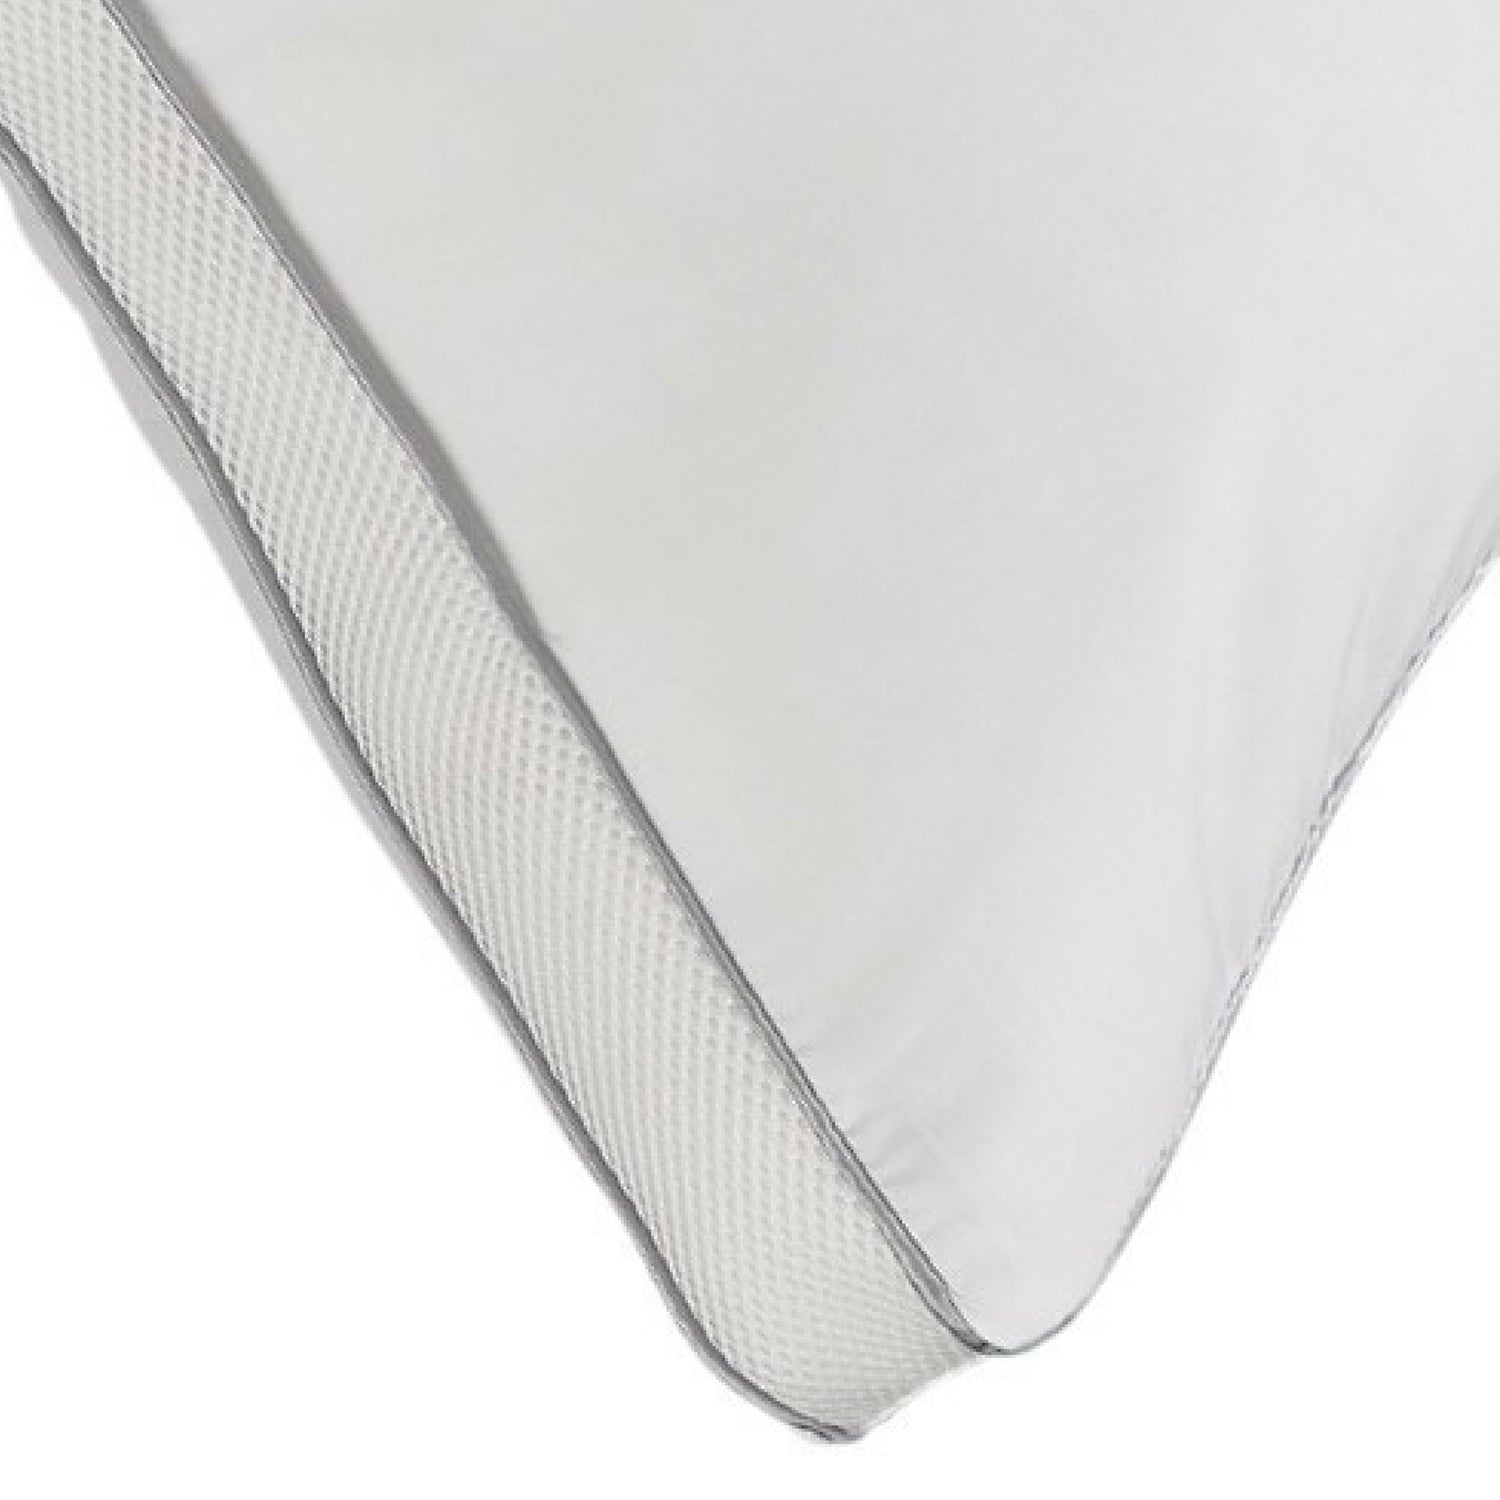 MEMORY FIBER Pillow 100% Cotton Luxurious Mesh Gusseted Shell All 